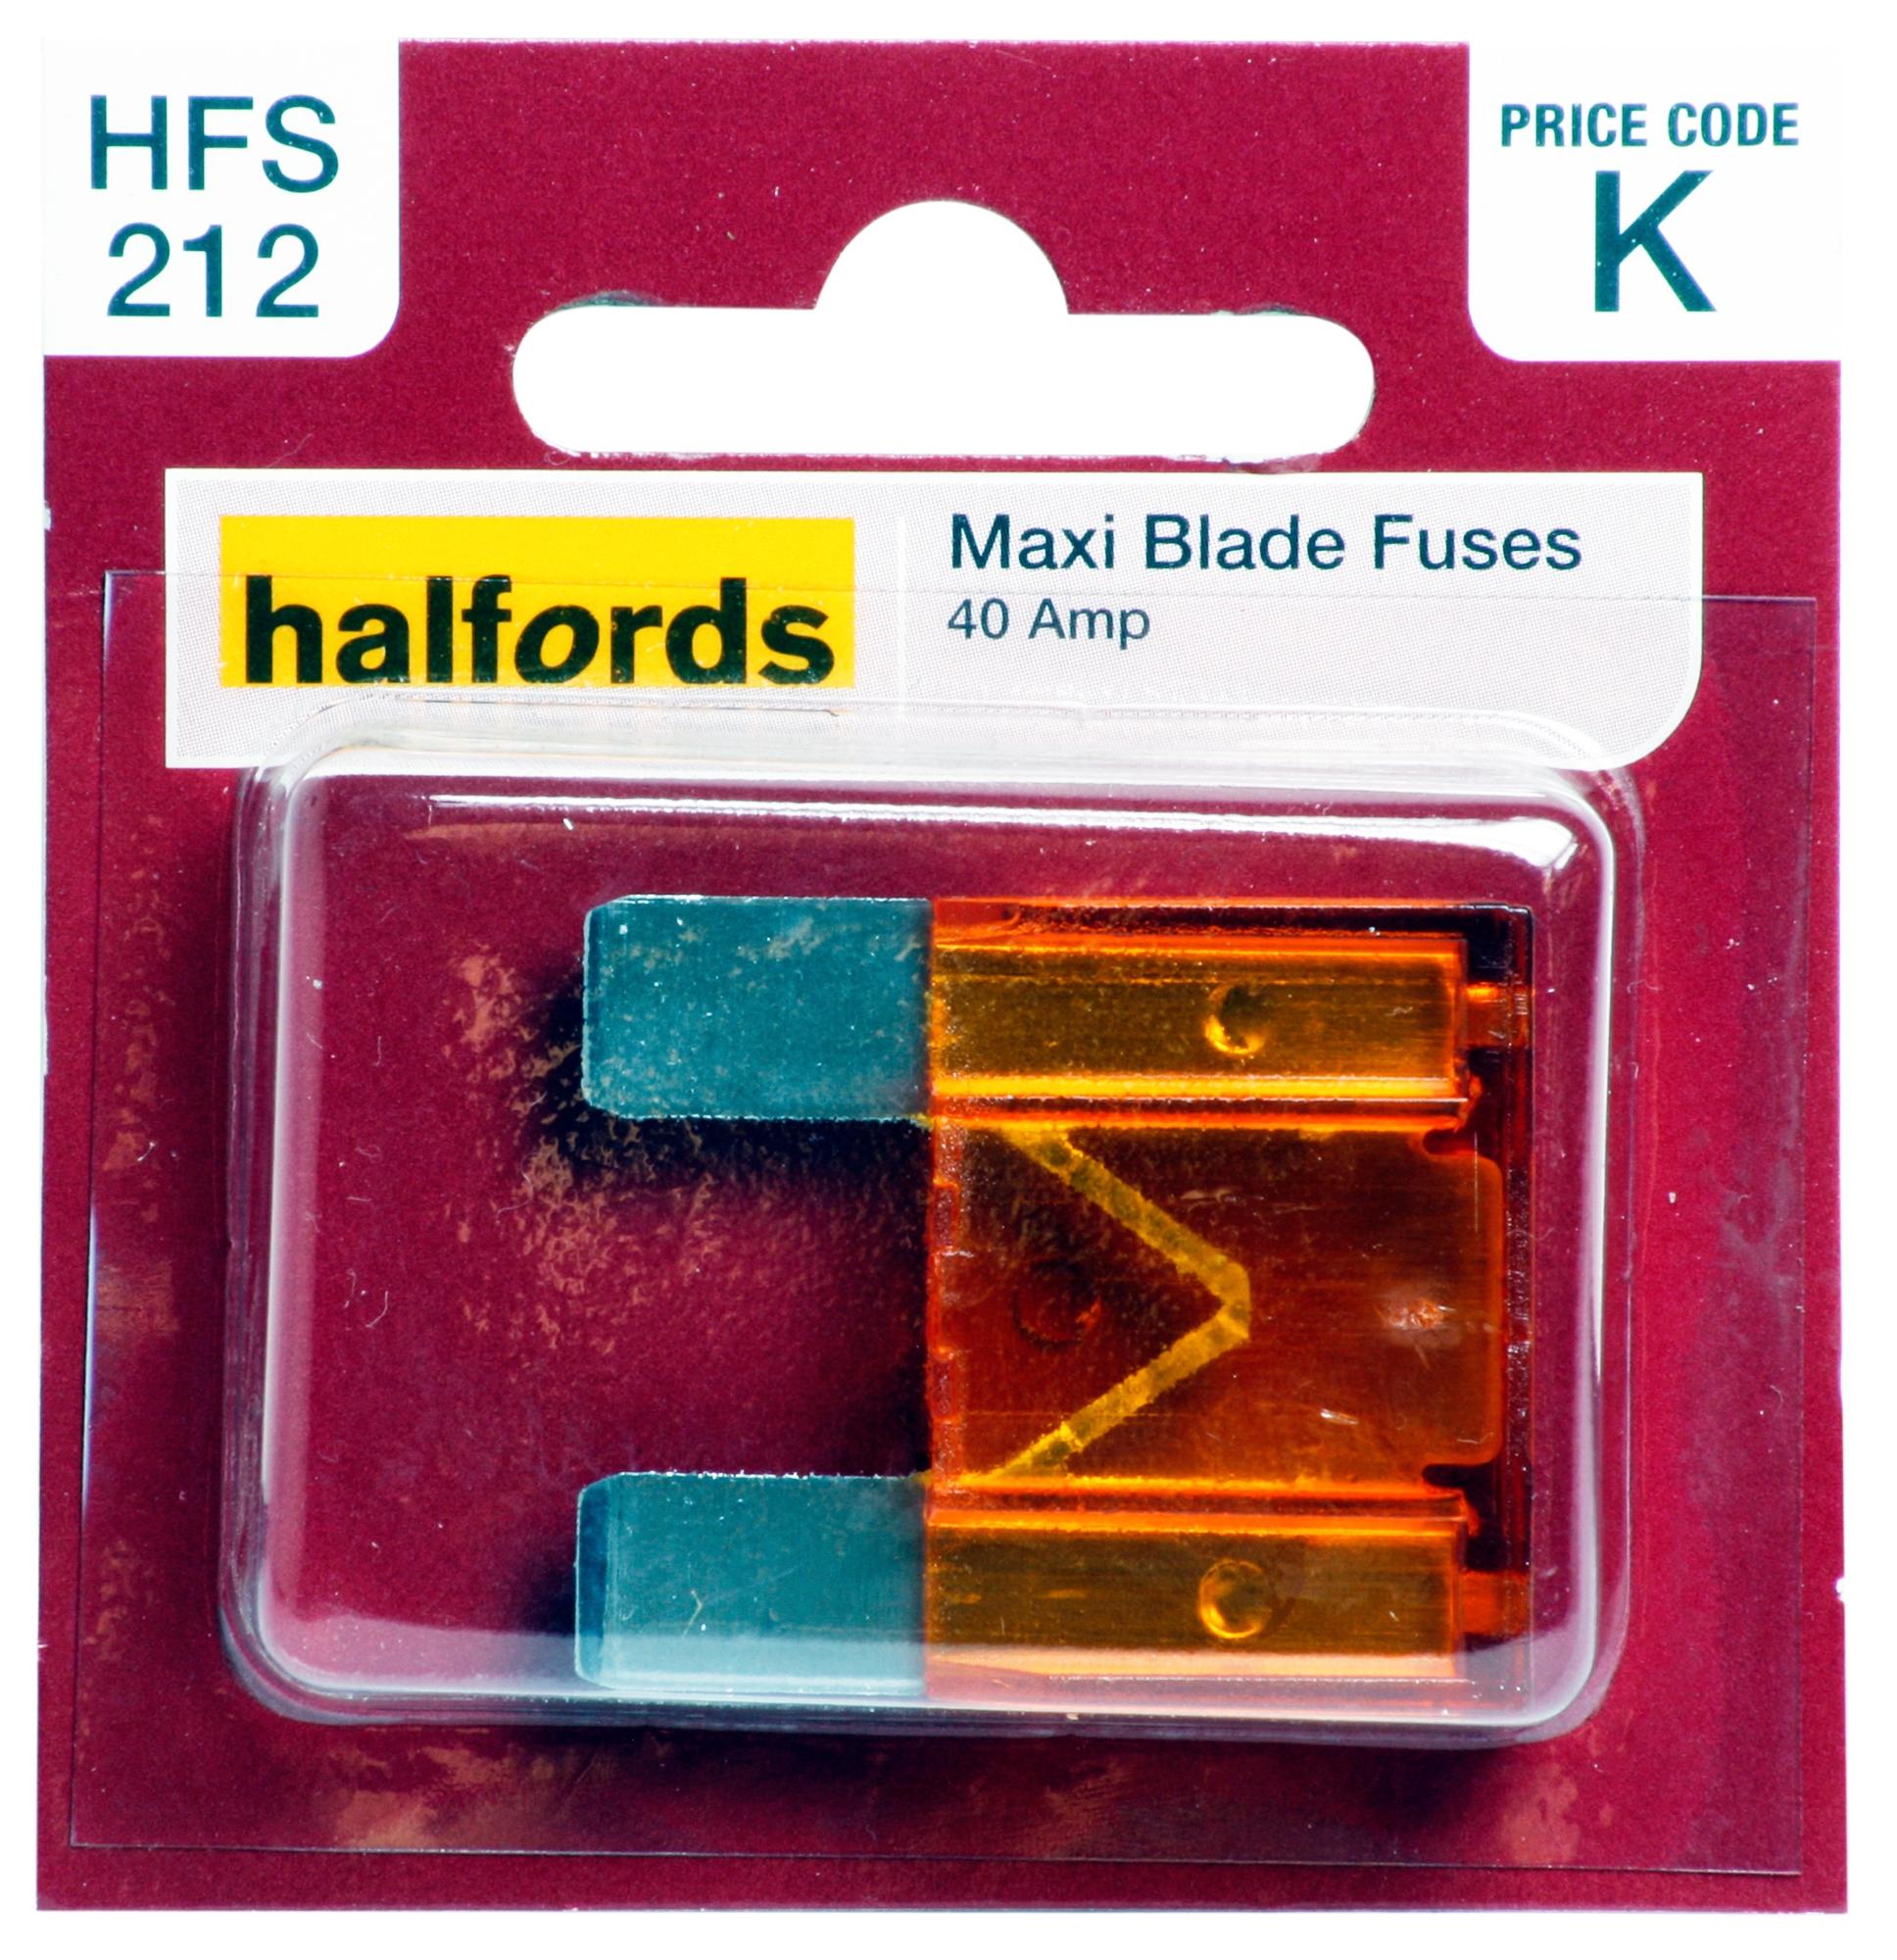 Halfords Maxi Blade Fuses 40 Amp (Hfs212)